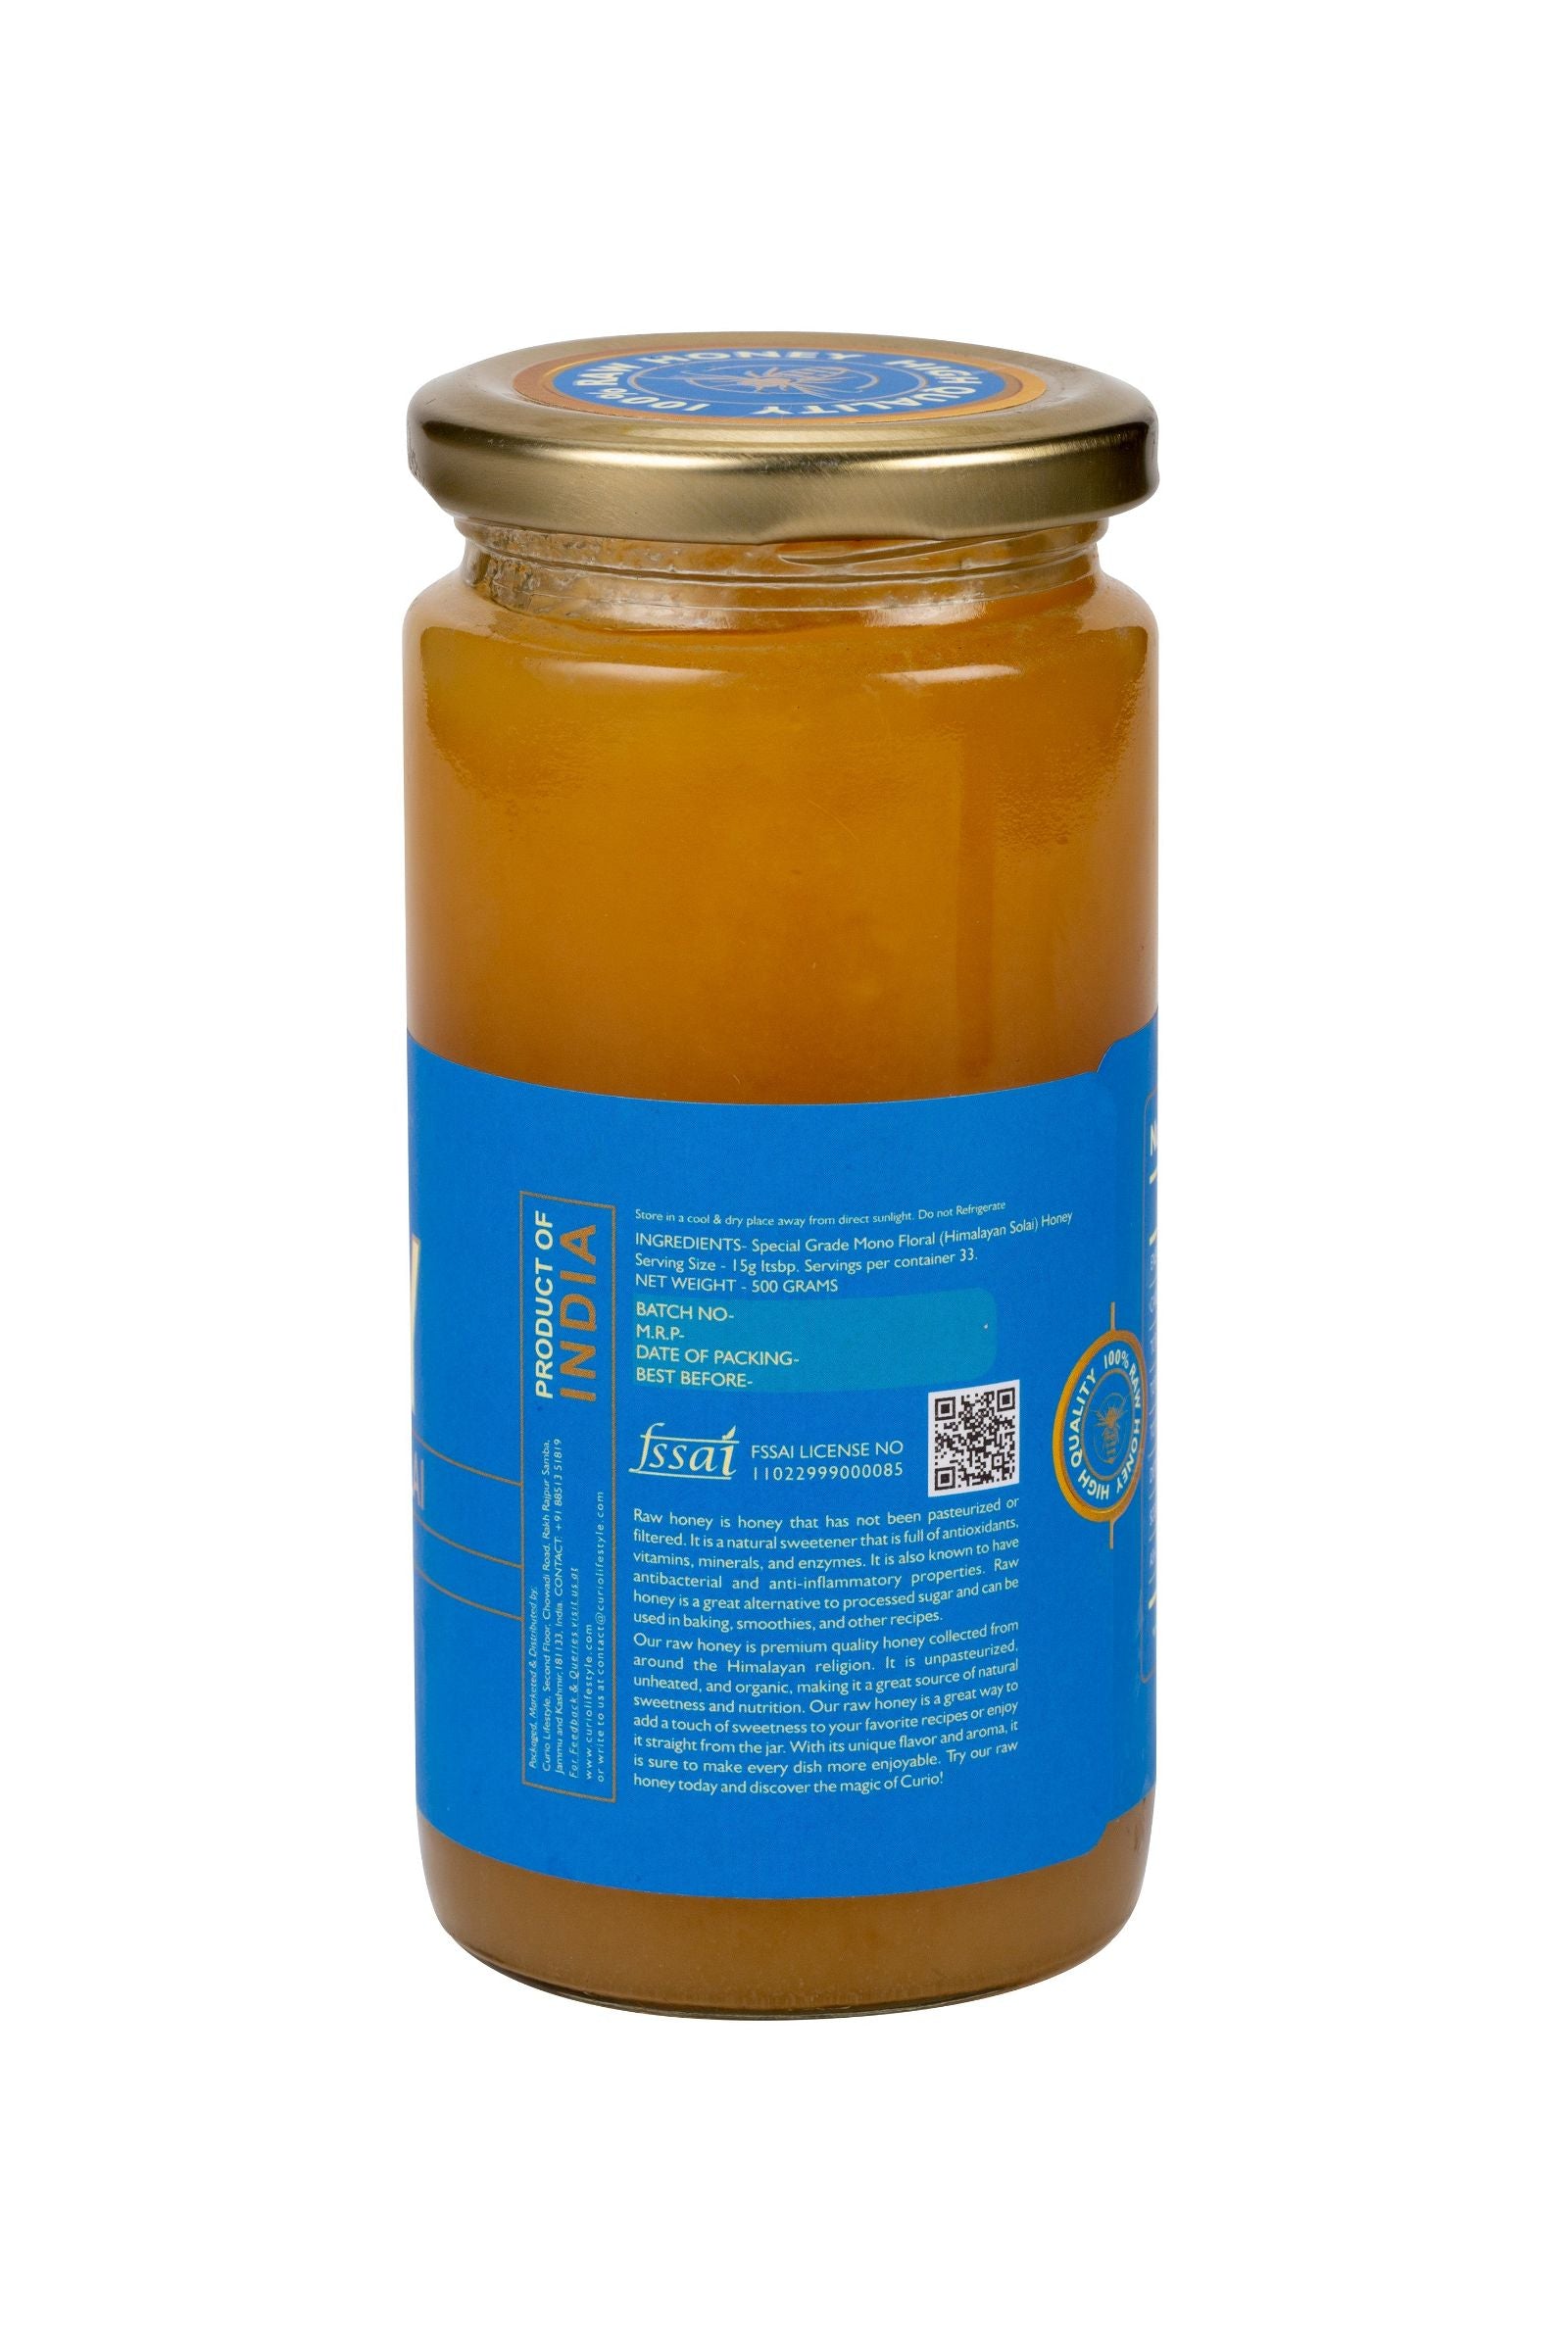 Exquisite Honey Combo: Himalayan Solai Indian Borage Honey & Raw Monofloral Honey - Hamiast